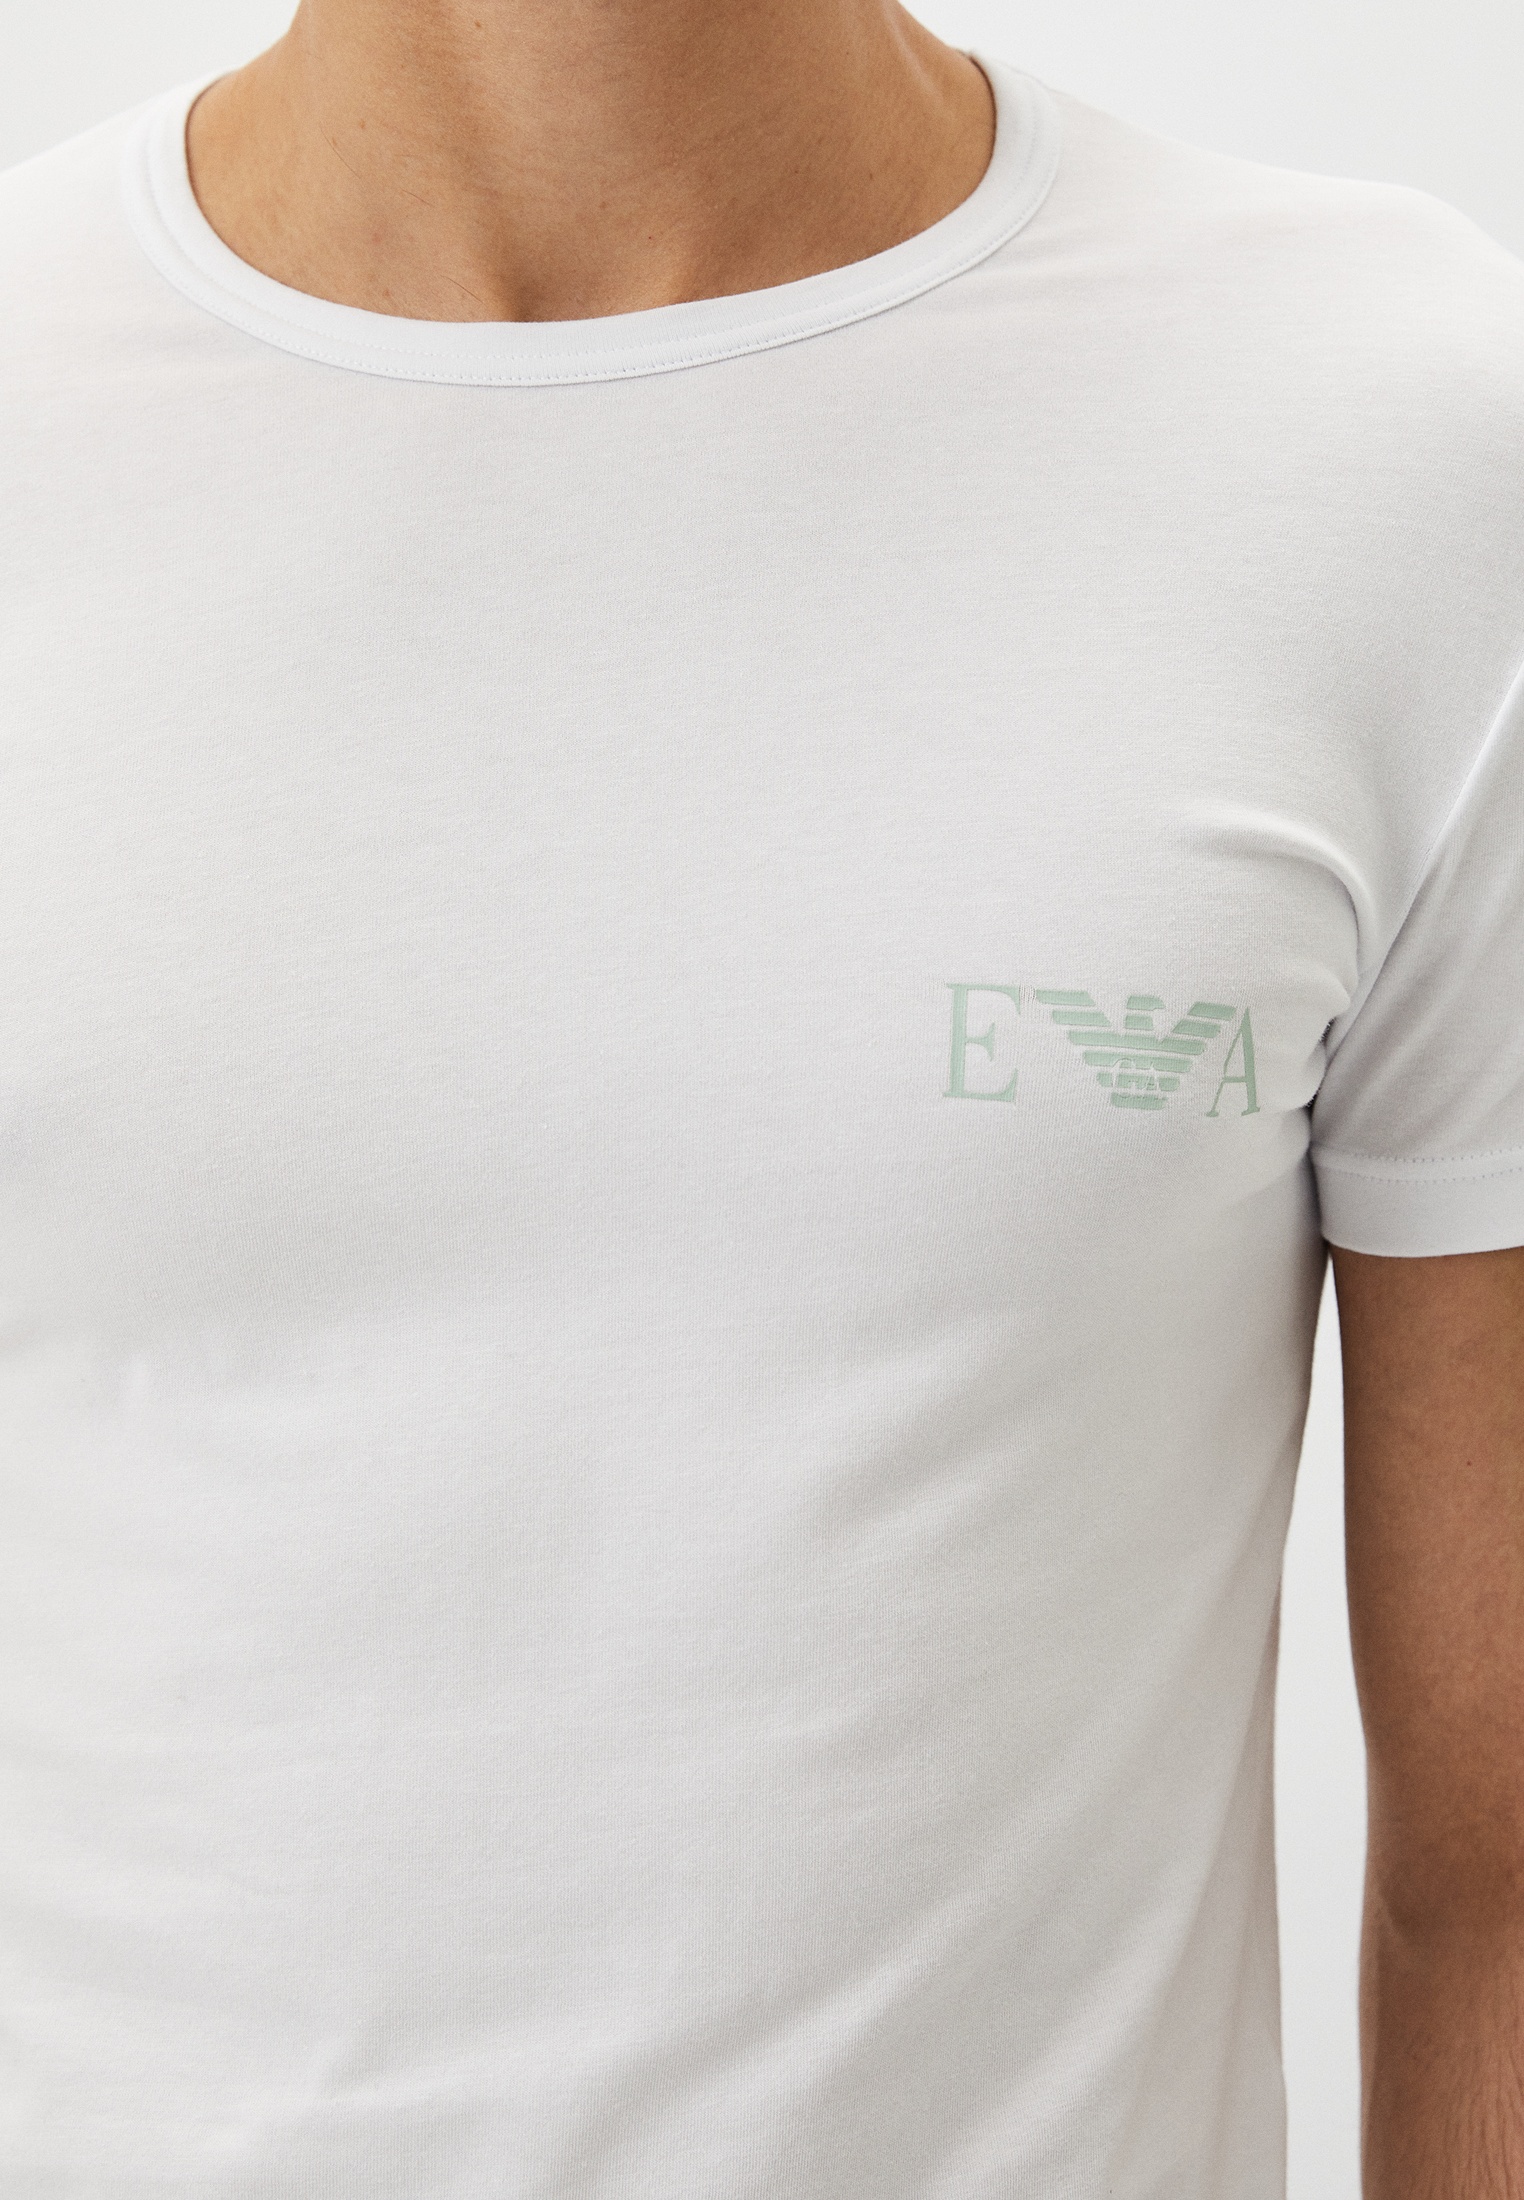 Мужская футболка Emporio Armani (Эмпорио Армани) 111670 4R715: изображение 7